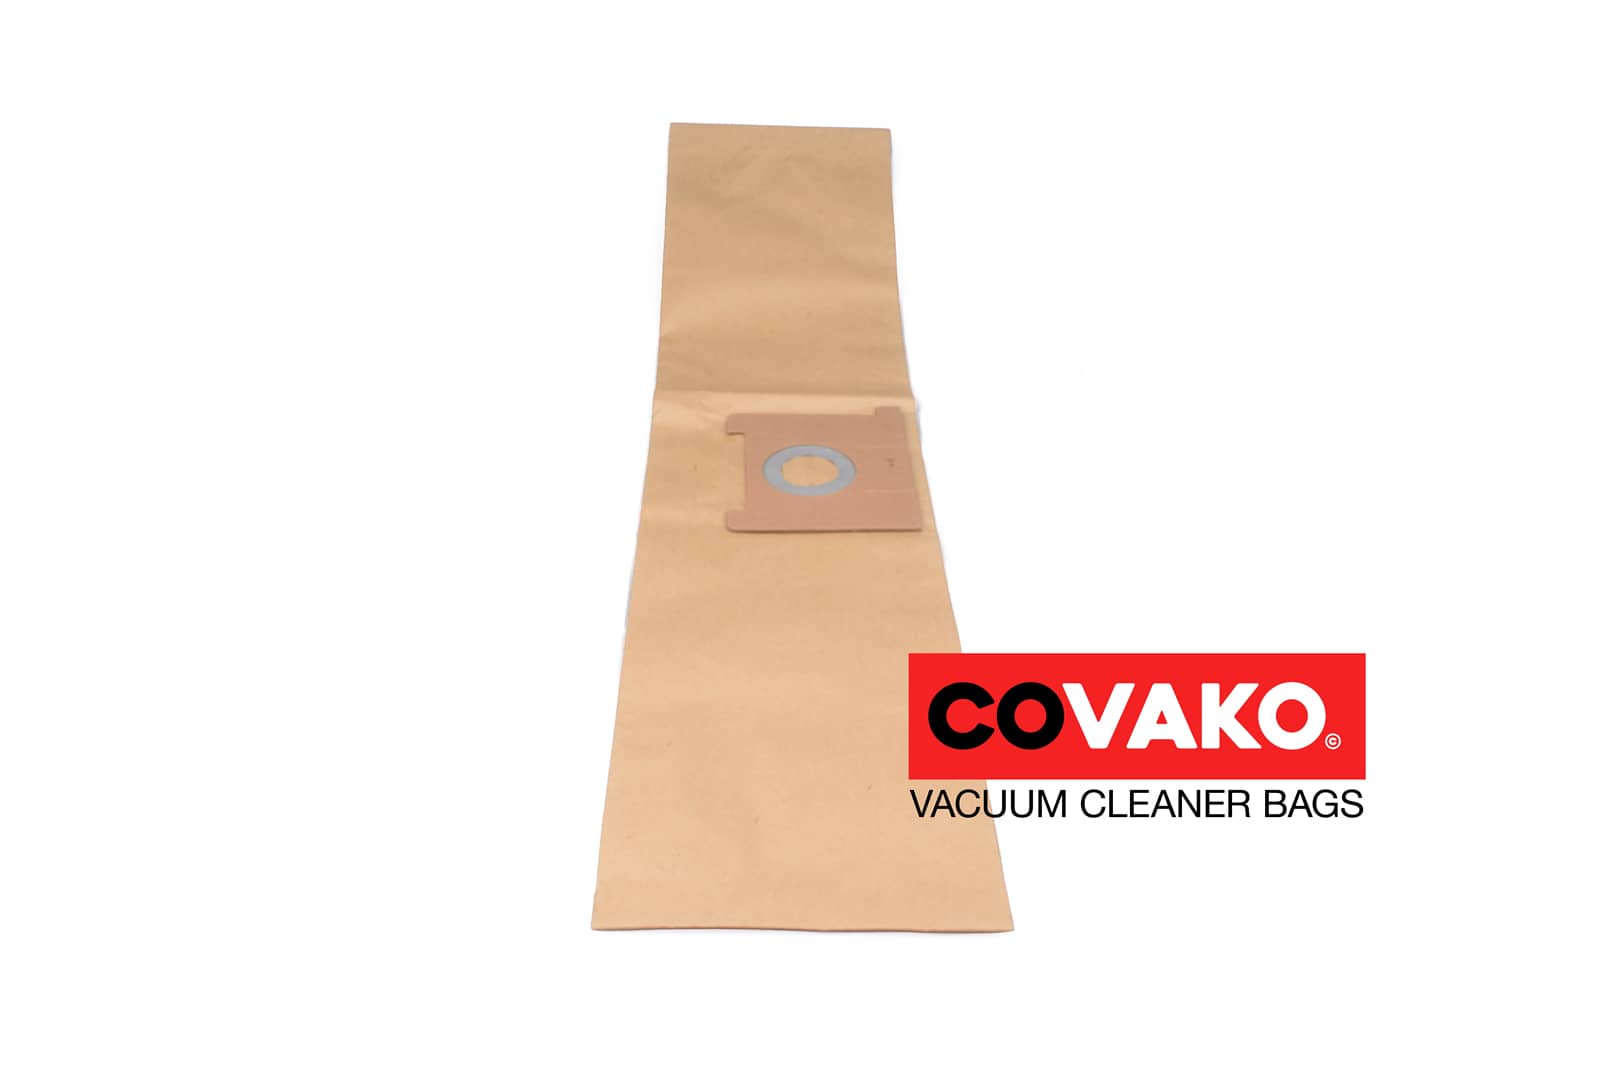 I-vac C9 / Paper - I-vac vacuum cleaner bags